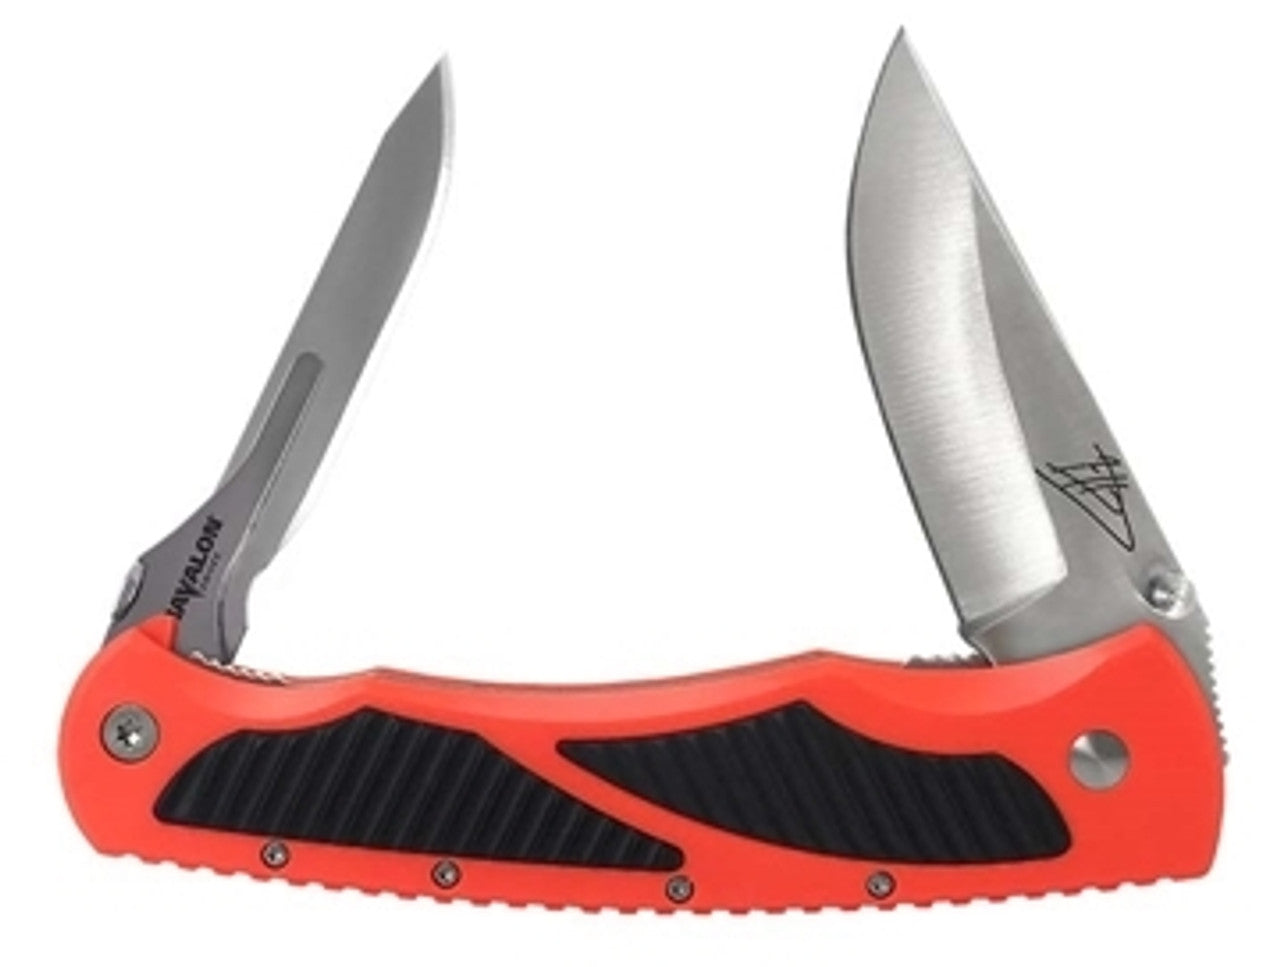 Havalon Titan Jim Shockey Signature Series Knife - Orange -  - Mansfield Hunting & Fishing - Products to prepare for Corona Virus